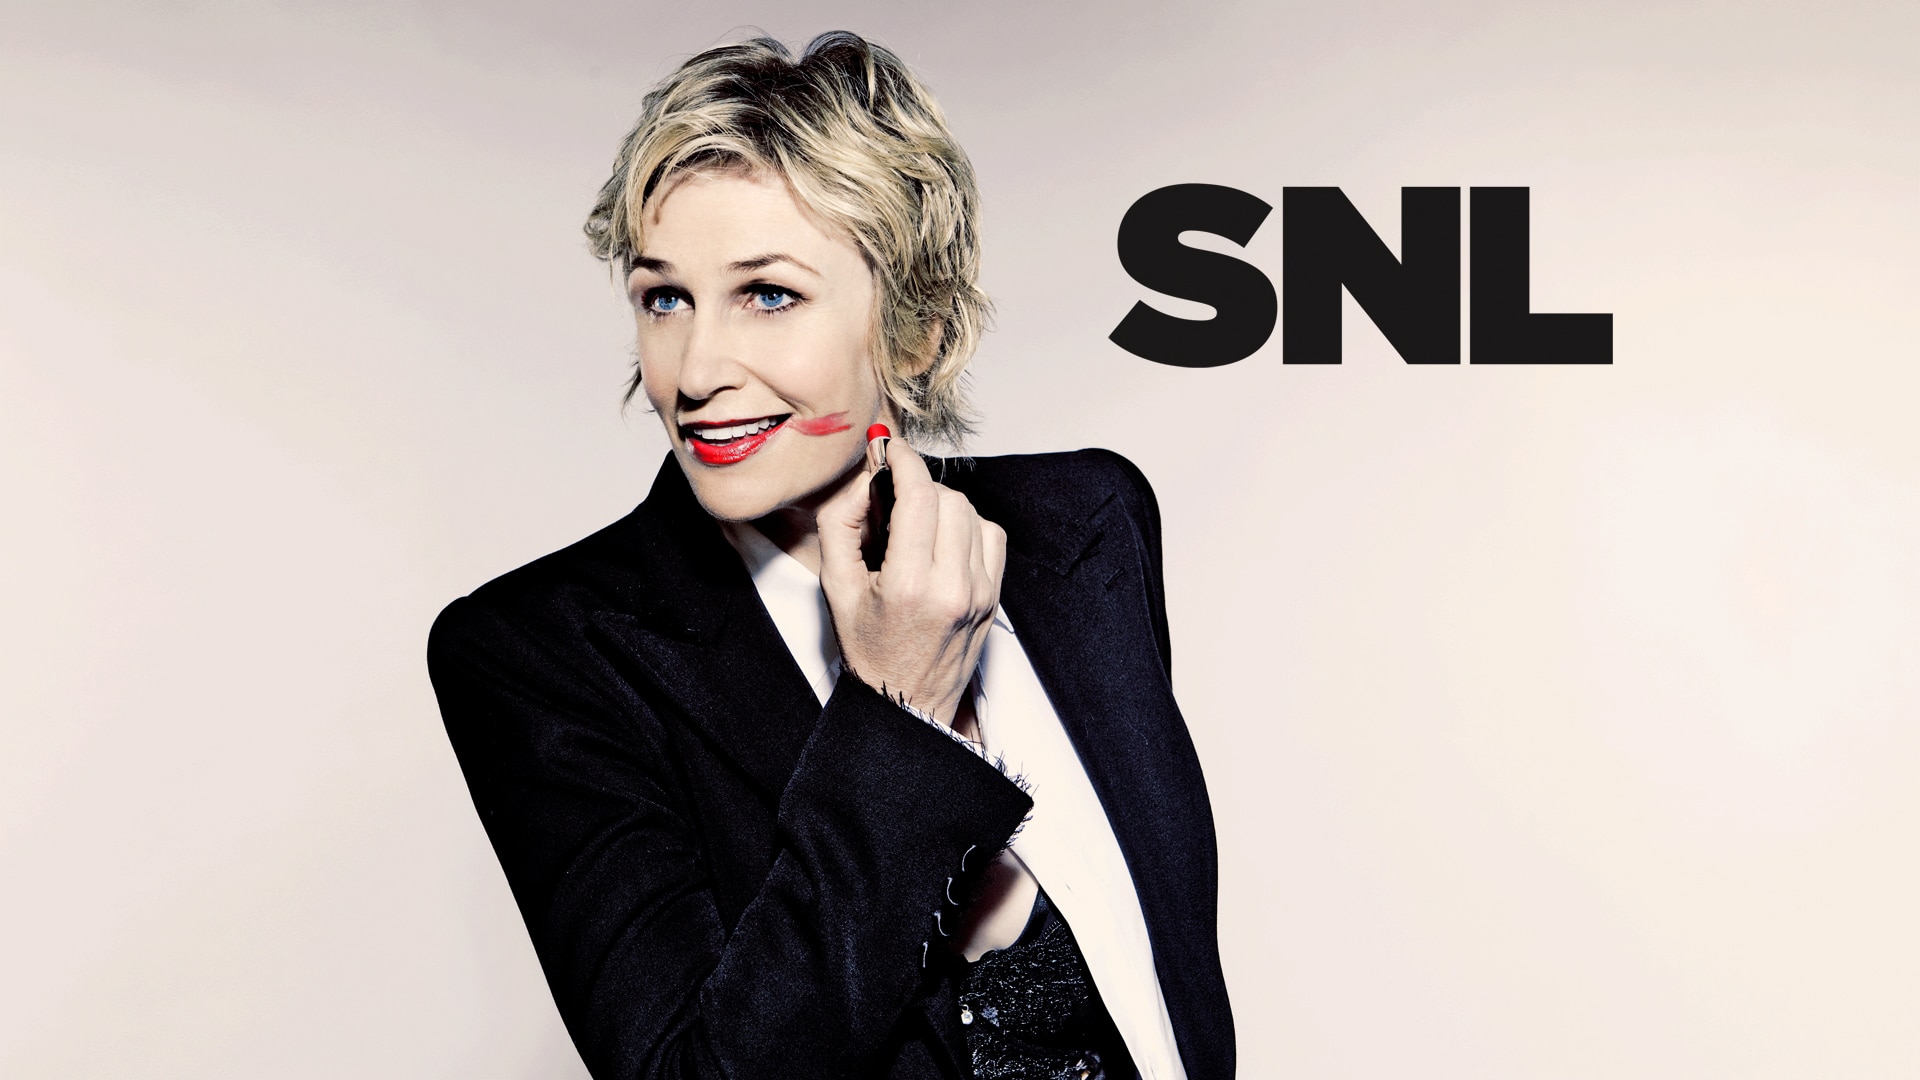 Saturday Night Live: Jane Lynch Photo: 138586 - NBC.com